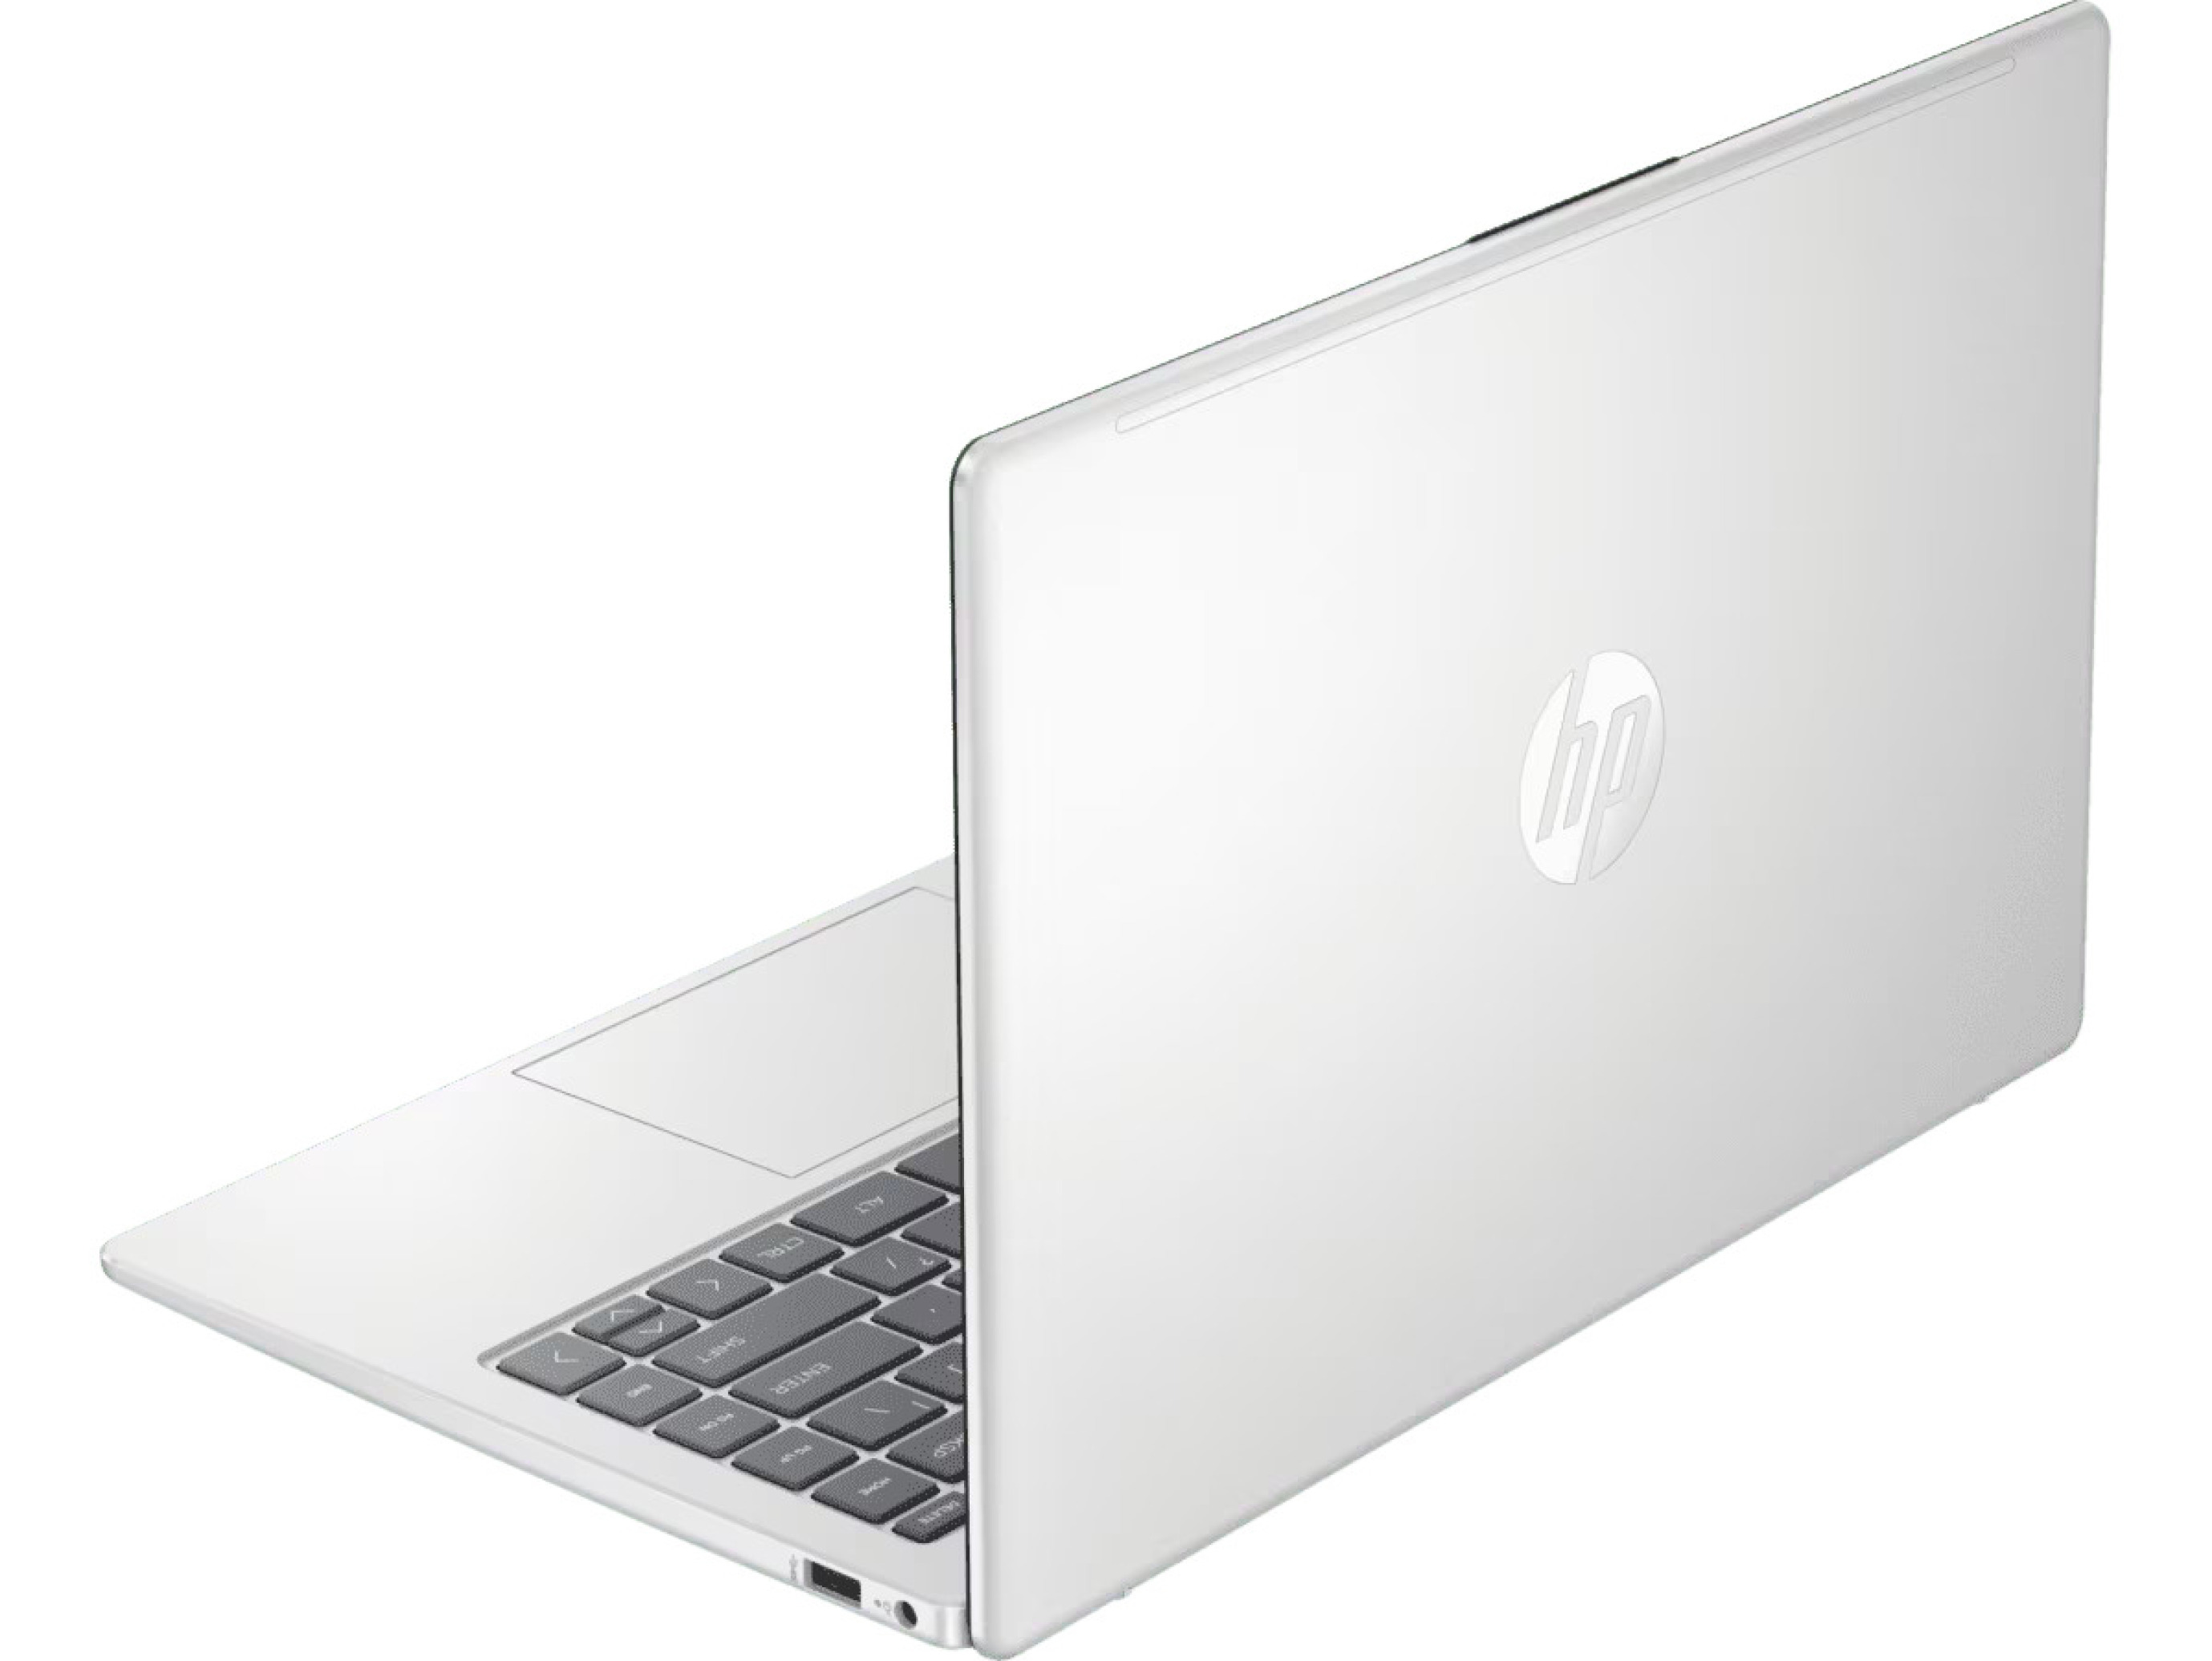  خرید،قیمت و مشخصات لپ تاپ HP Laptop 14 EM0004AU RYZEN 5 7530U | لاکچری لپ تاپ 